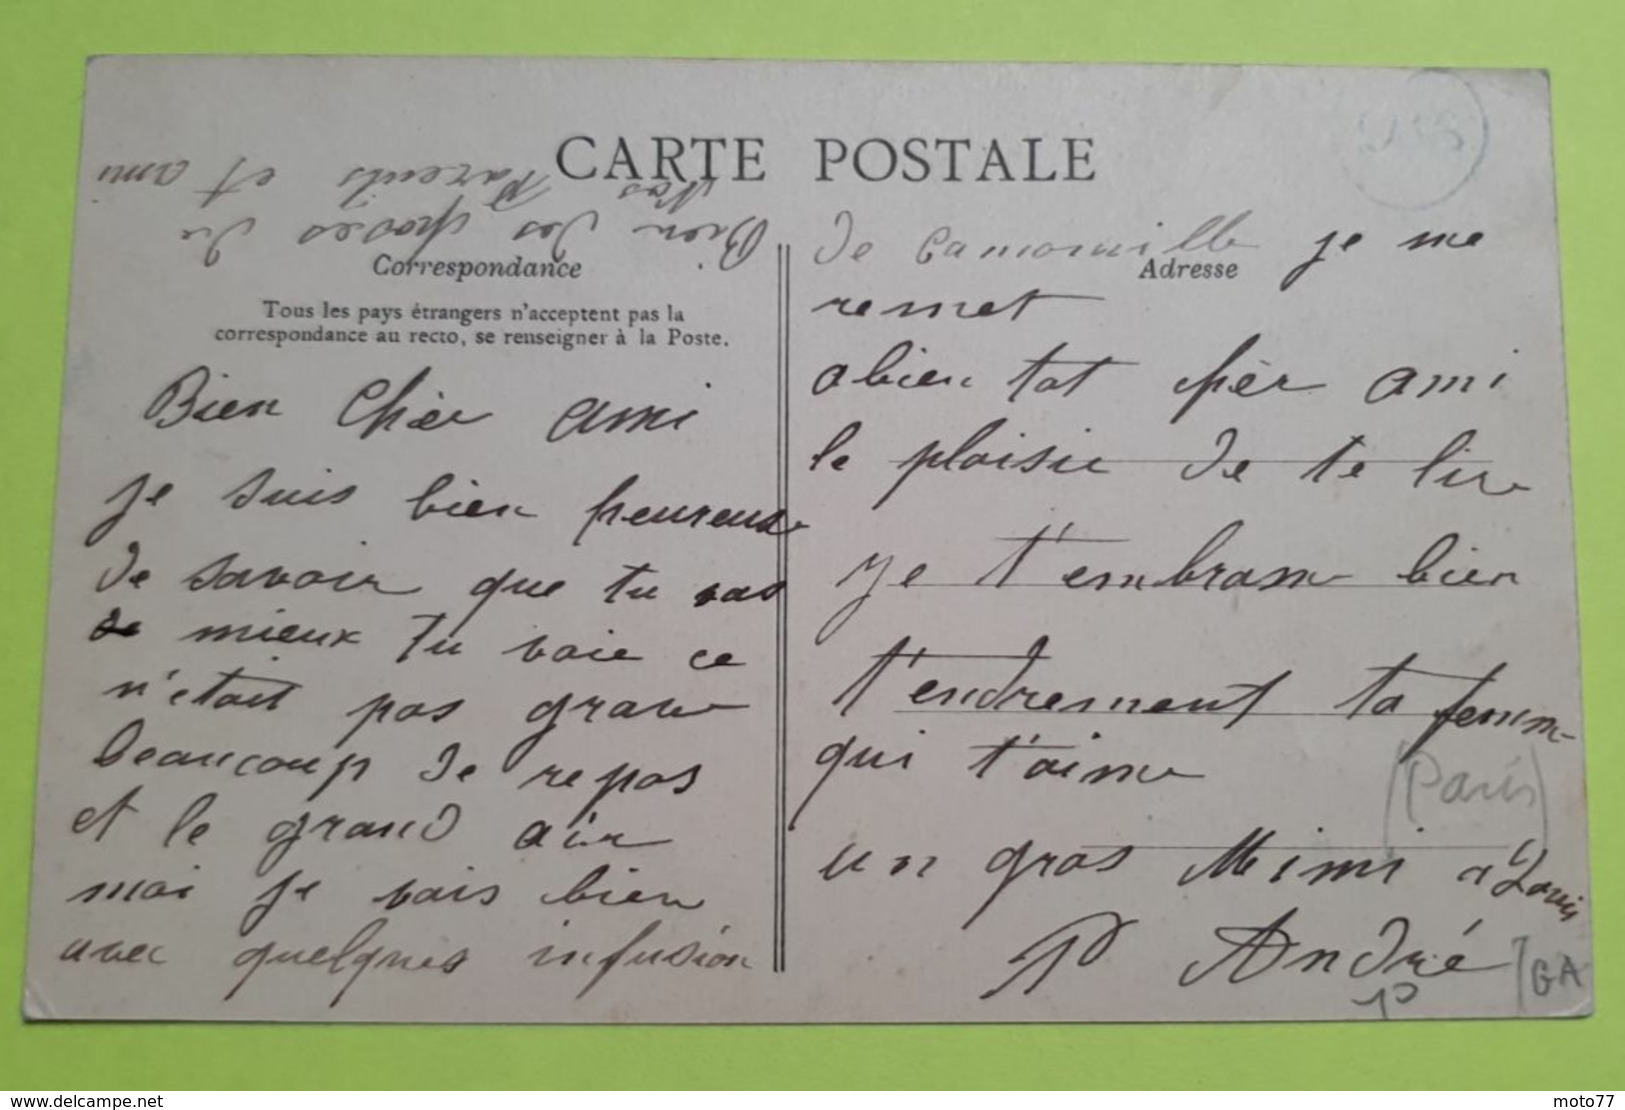 15 CPA cartes postales Chromo - PARIS - Luigi Loir - Lefèvre Utile - vers 1900 - Biscuit LU /40